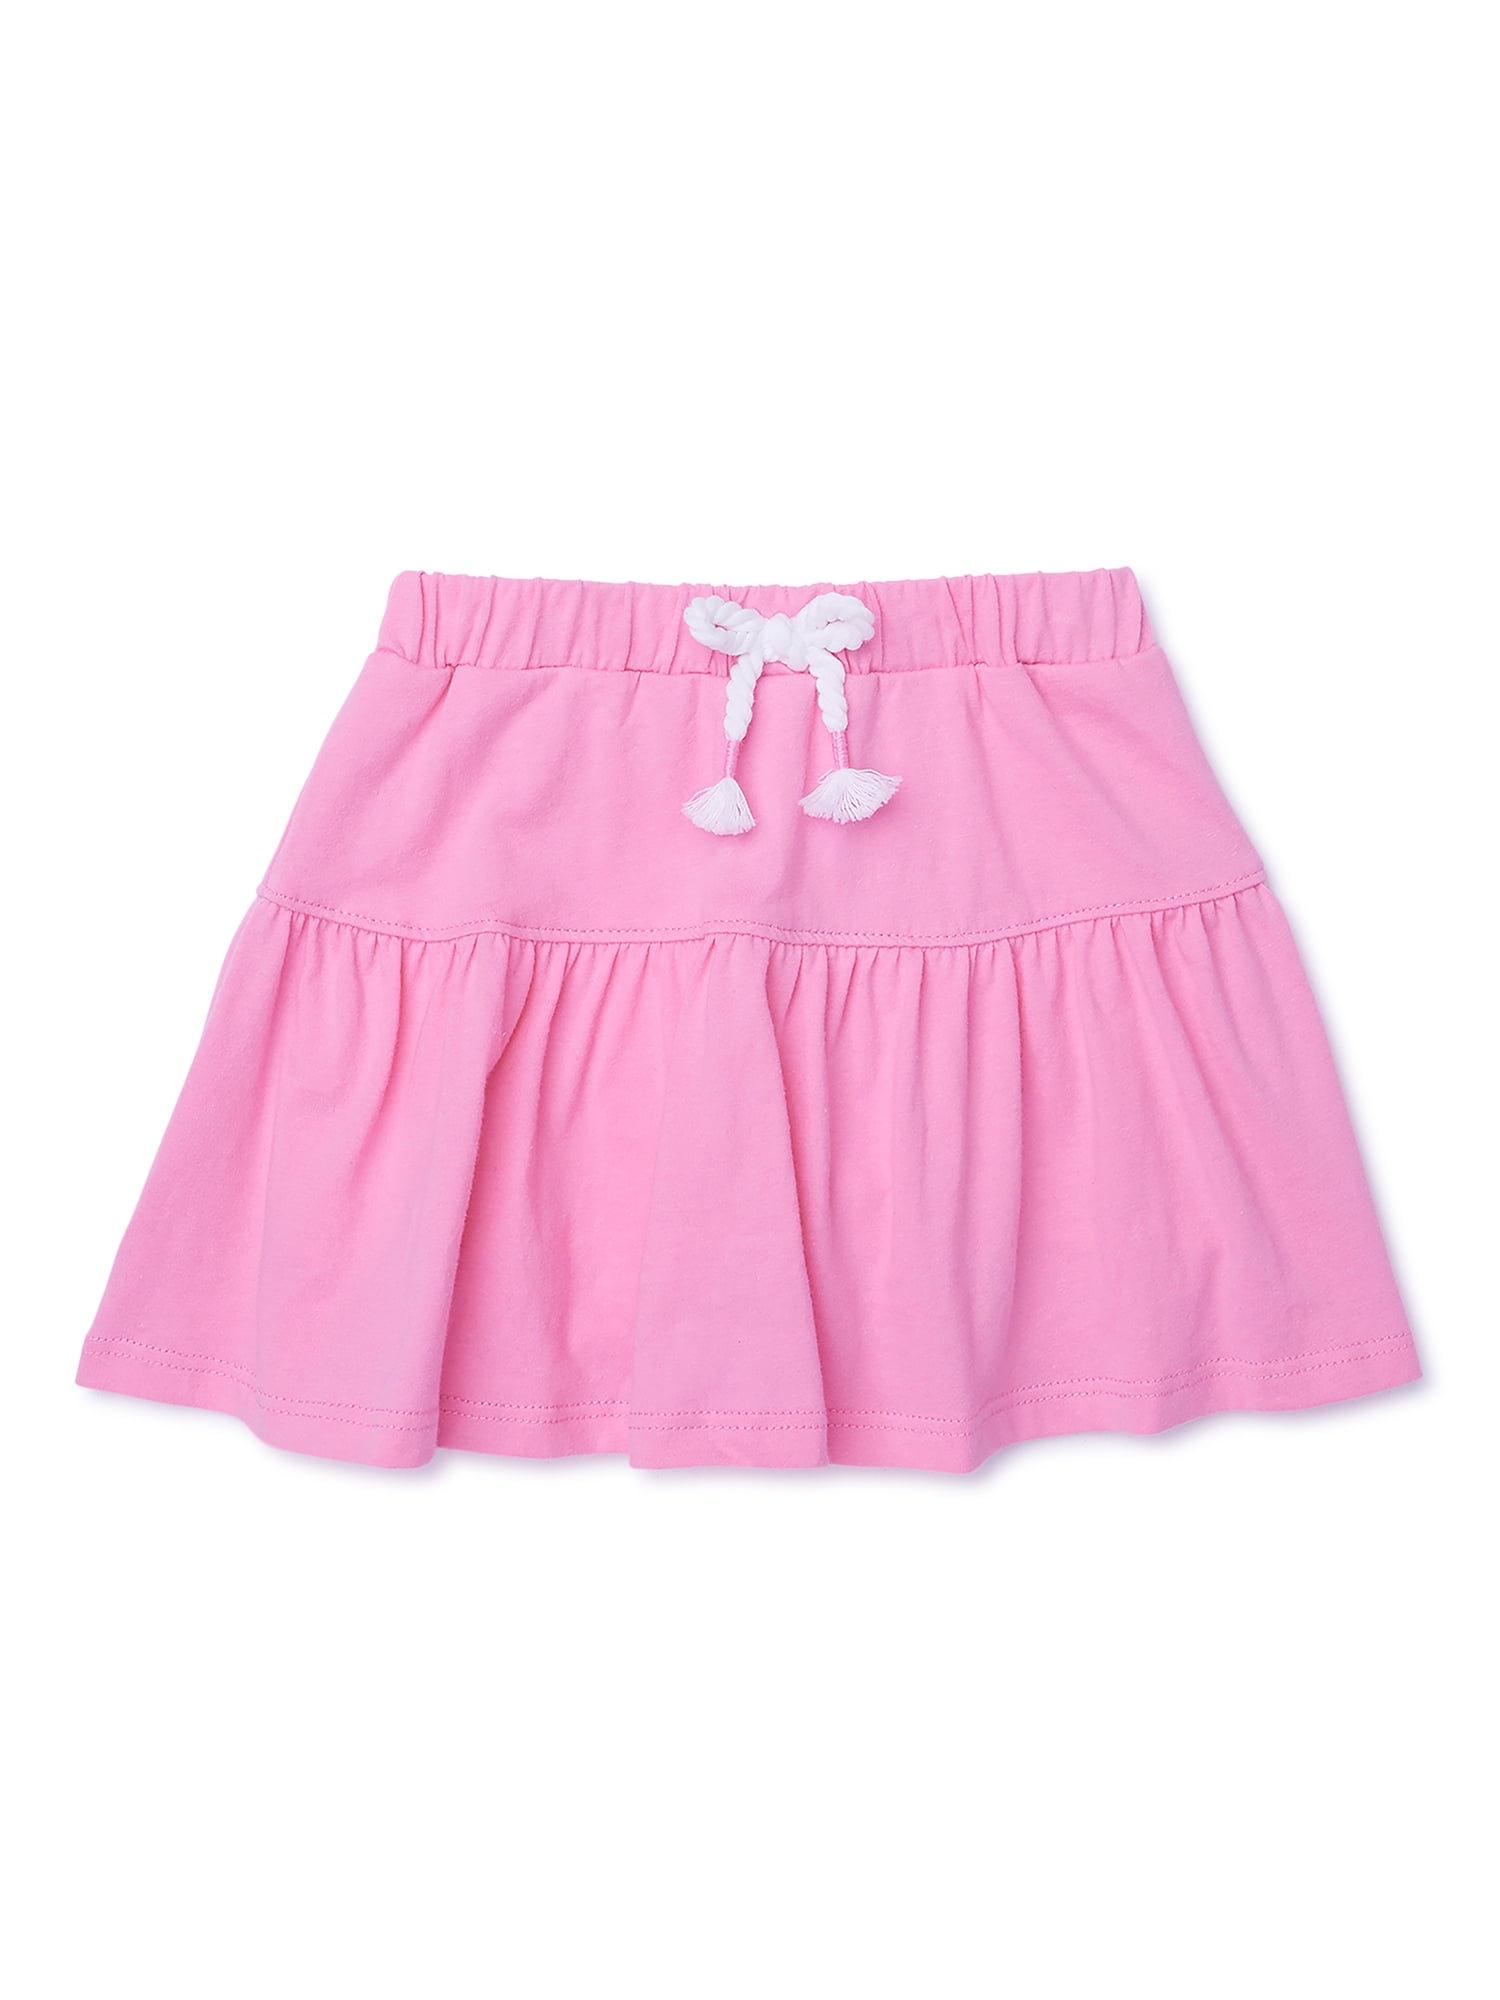 Garanimals Toddler Girl Solid Skirt, Sizes 18M-5T - Walmart.com